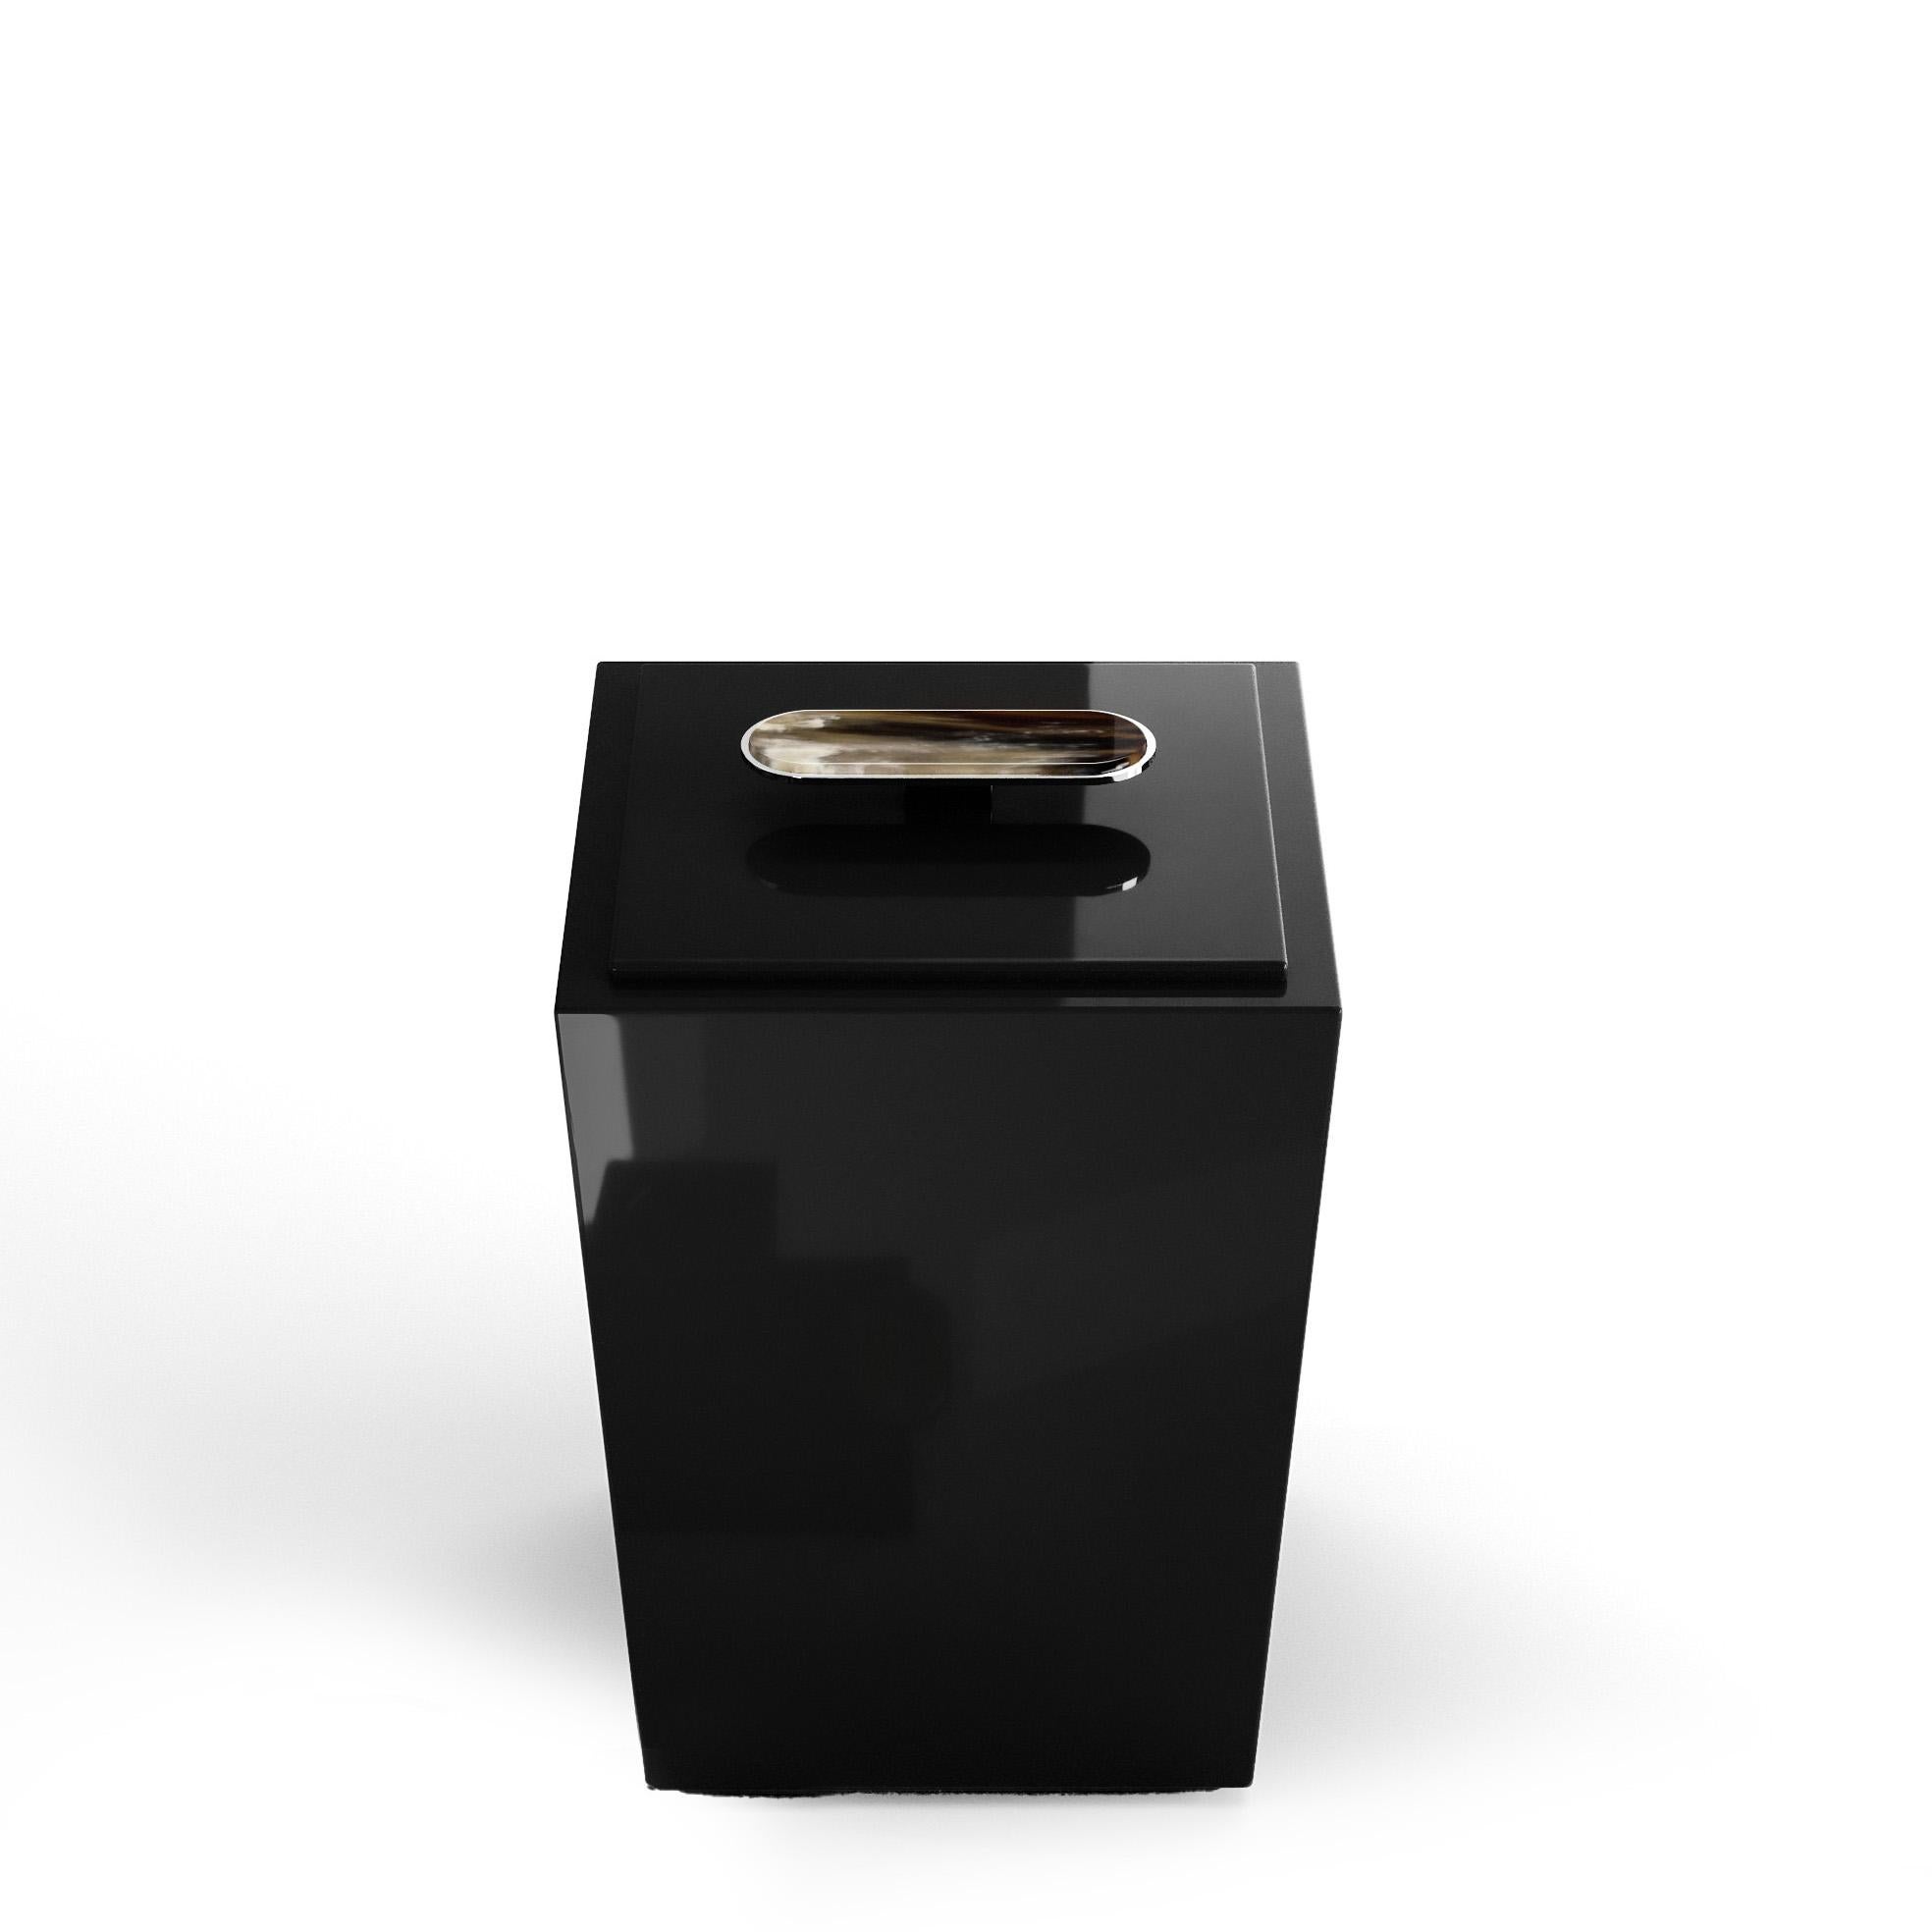 Bicco Waste Papierkorb aus schwarz lackiertem Holz und Corno Italiano, Mod. 2426 (Lackiert) im Angebot